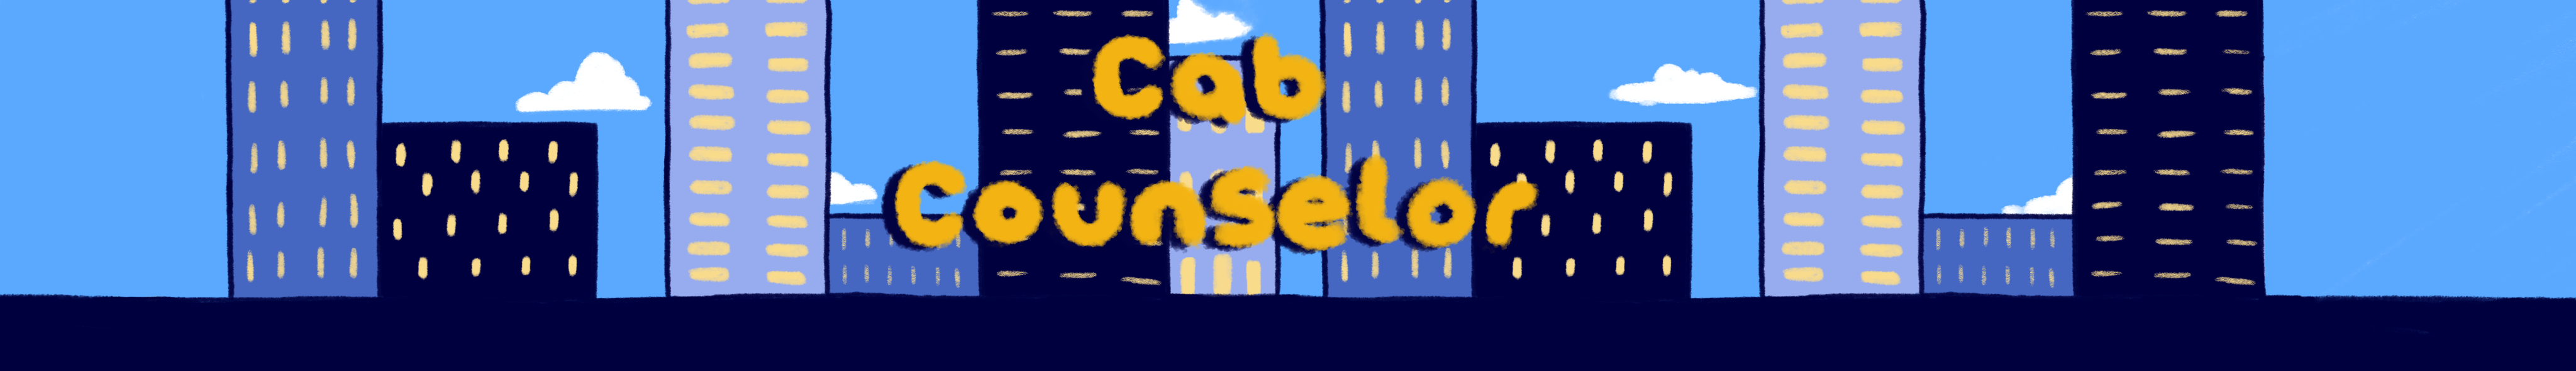 Cab Counselor